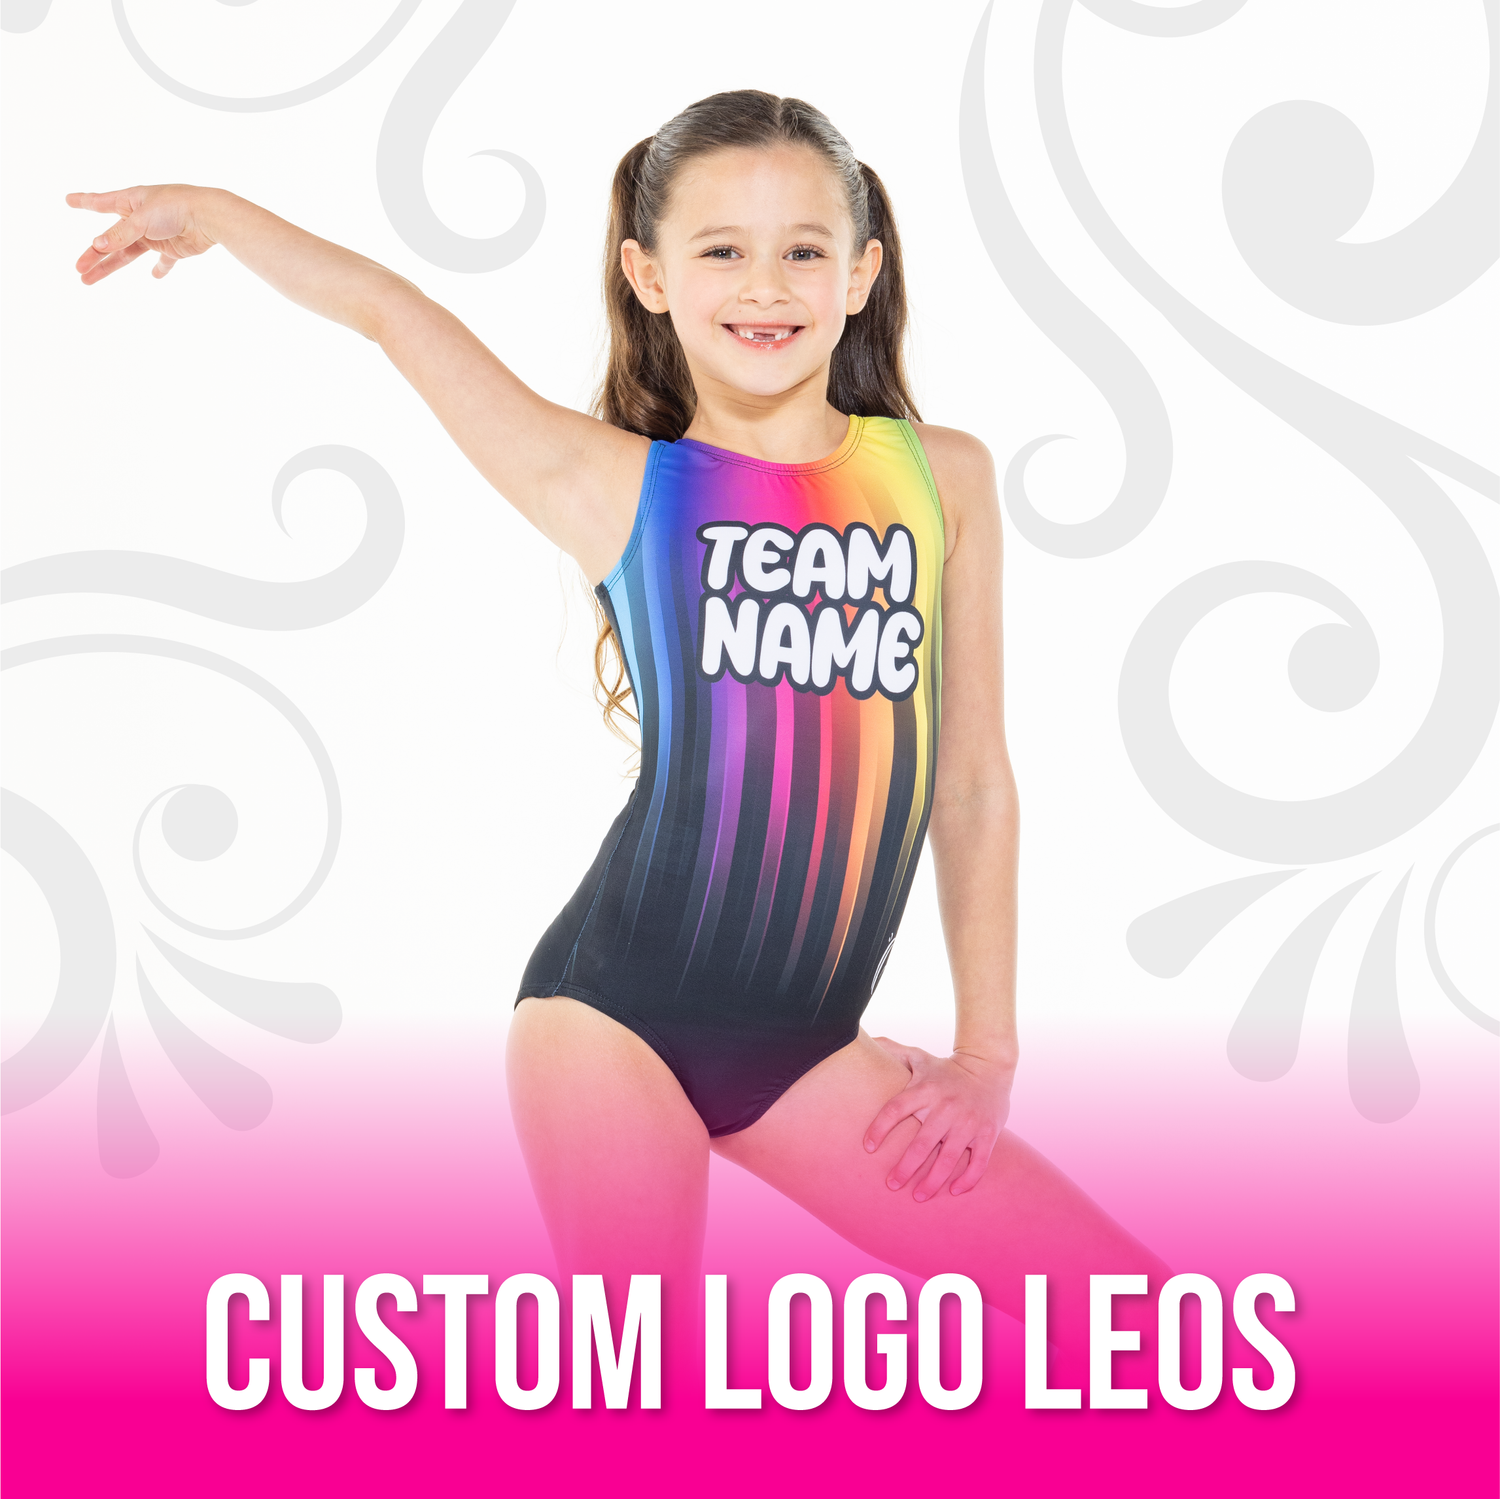 Personalized Gymnastics Leotards & Bodysuits, Custom Printed